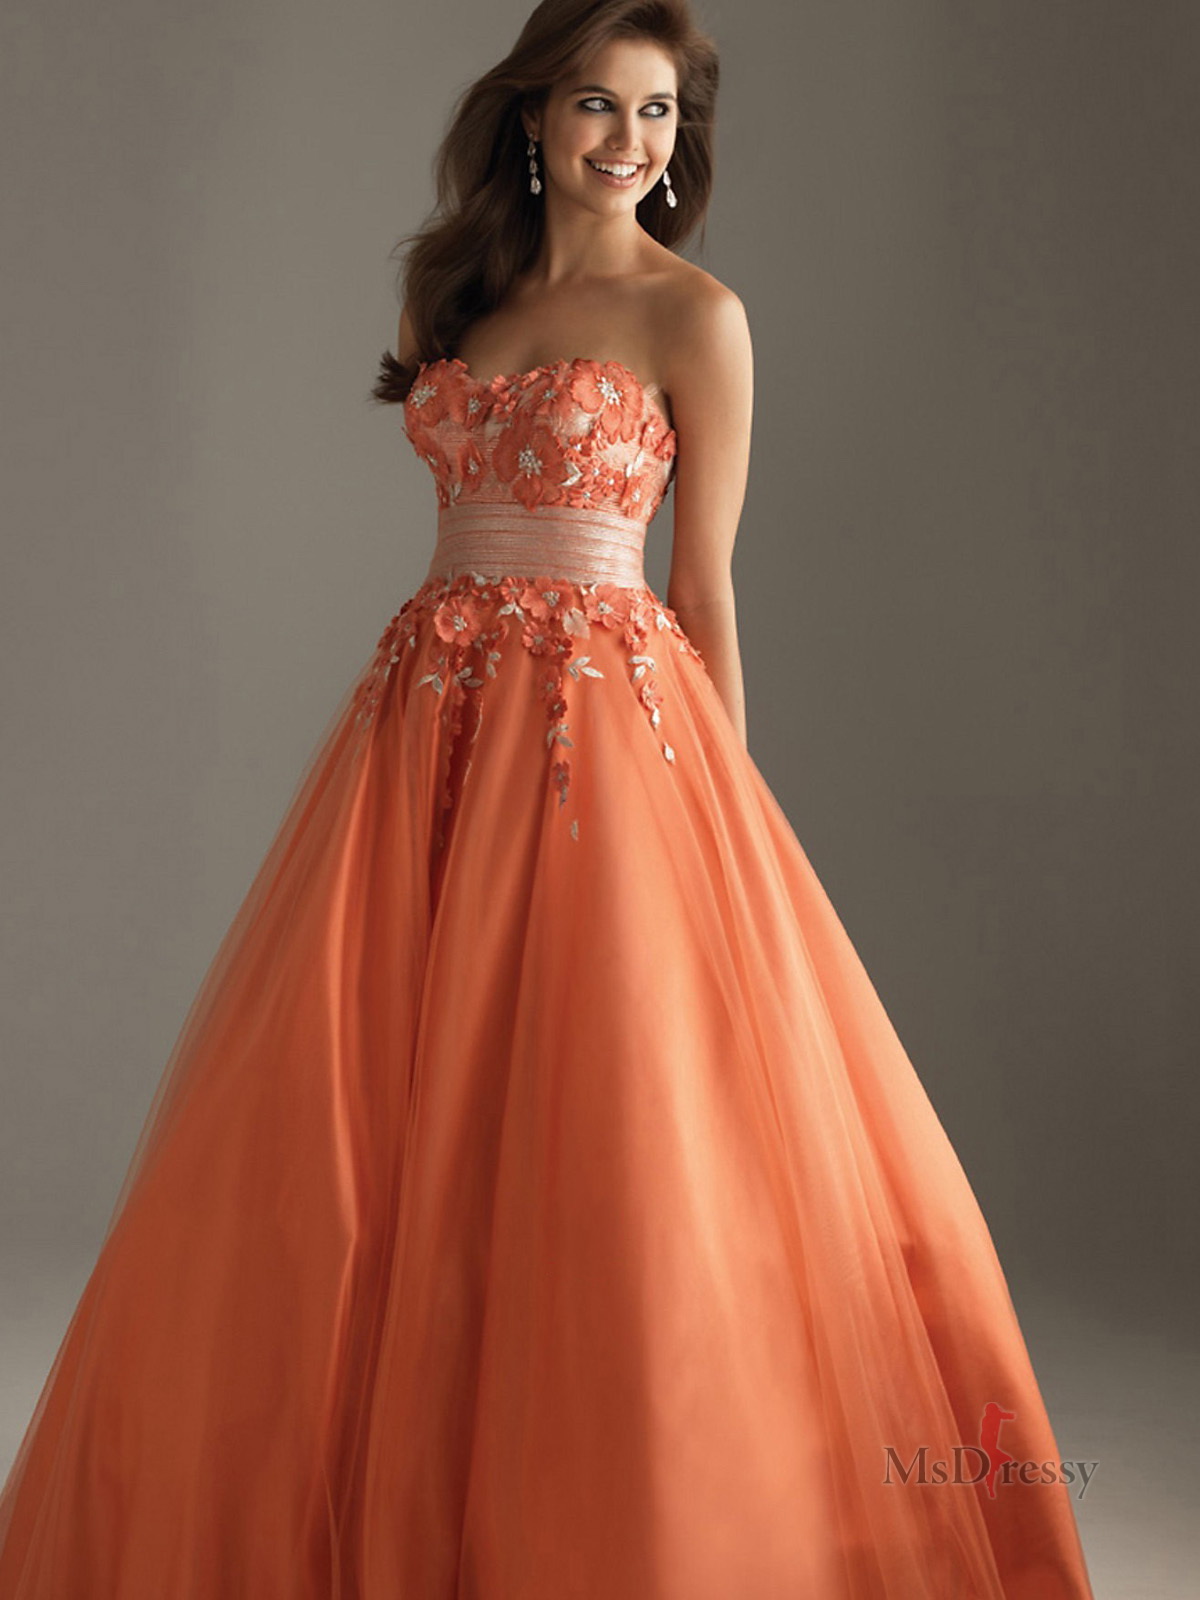 Orange Prom Dresses - Orange Dresses for Prom ~ Simply Fashion Blog